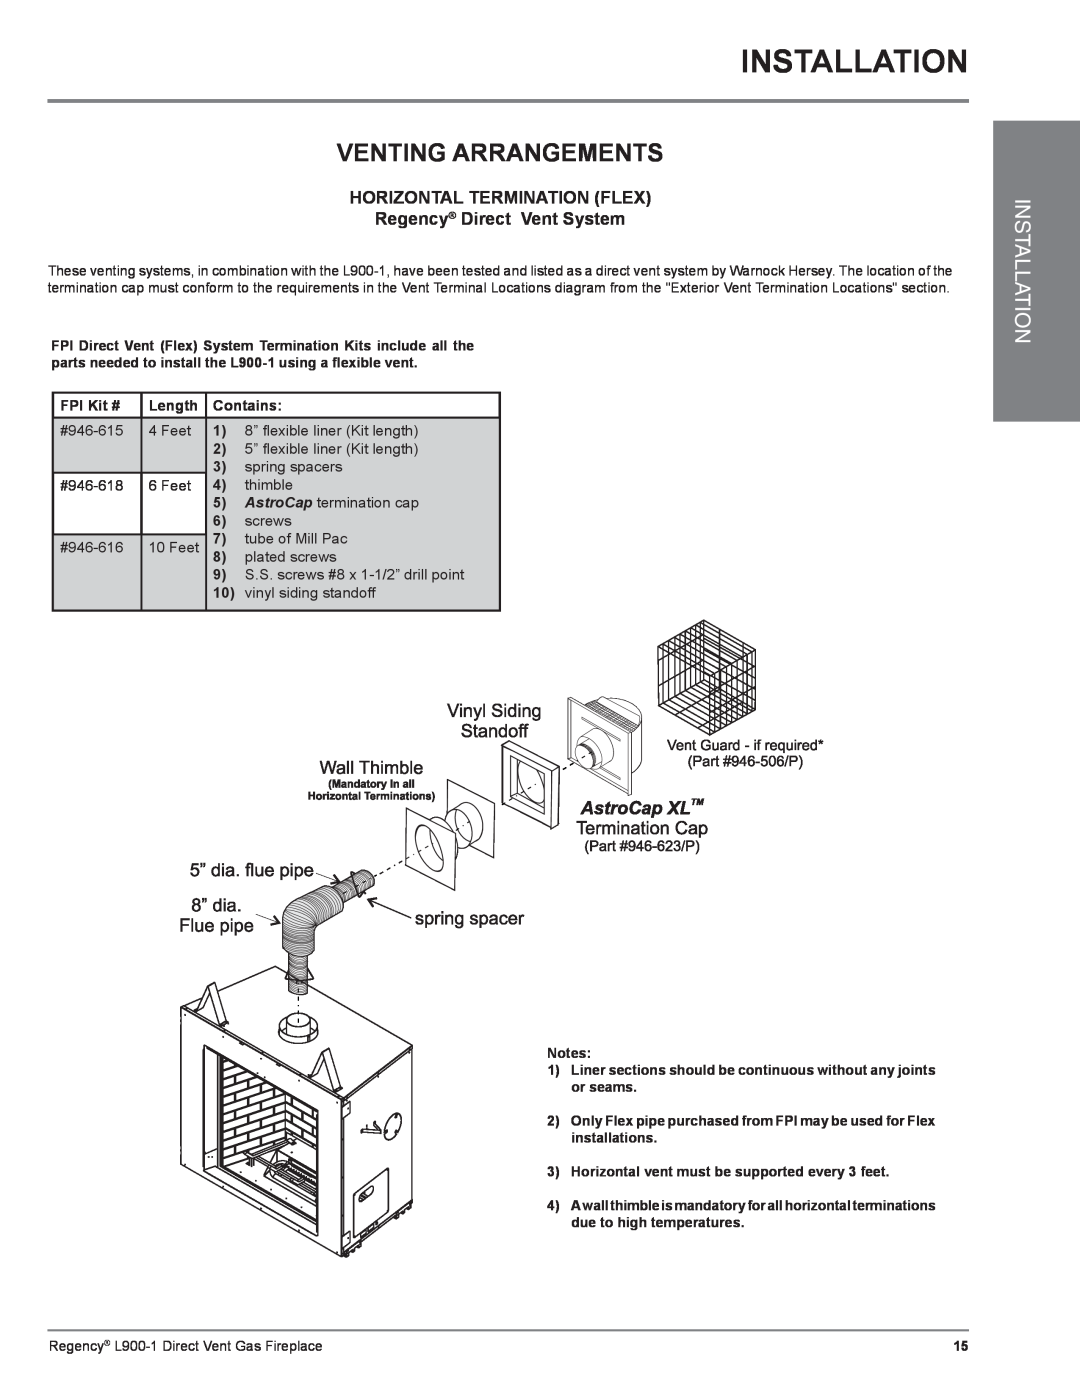 Regency L900-1 installation manual Installation, Venting Arrangements, FPI Kit #, Length, Contains, Notes 